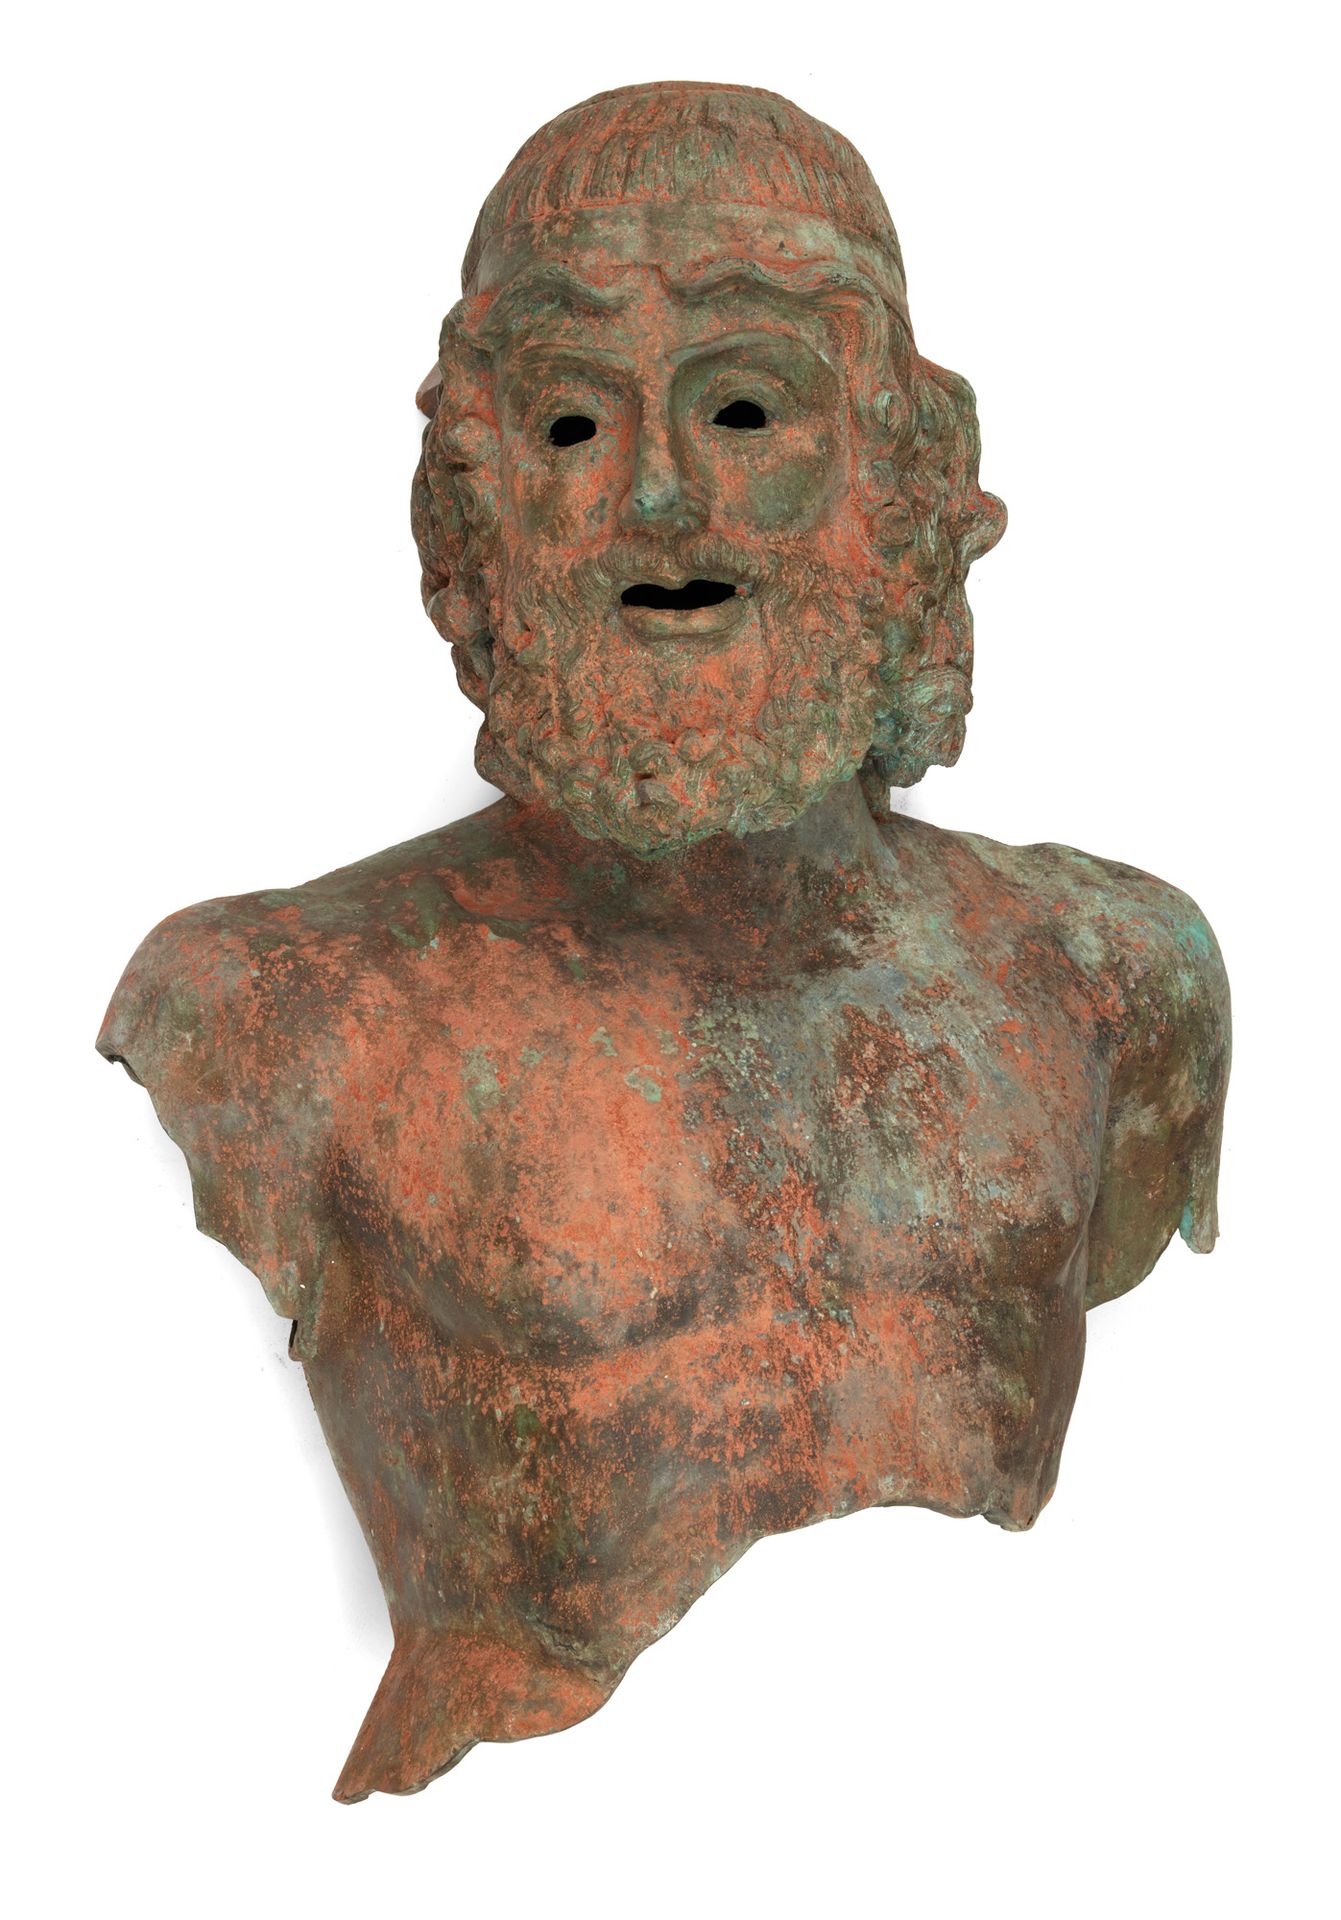 Buste de Neptune d'après l'Antique Busto de Neptuno después de la Antigüedad

Hi&hellip;